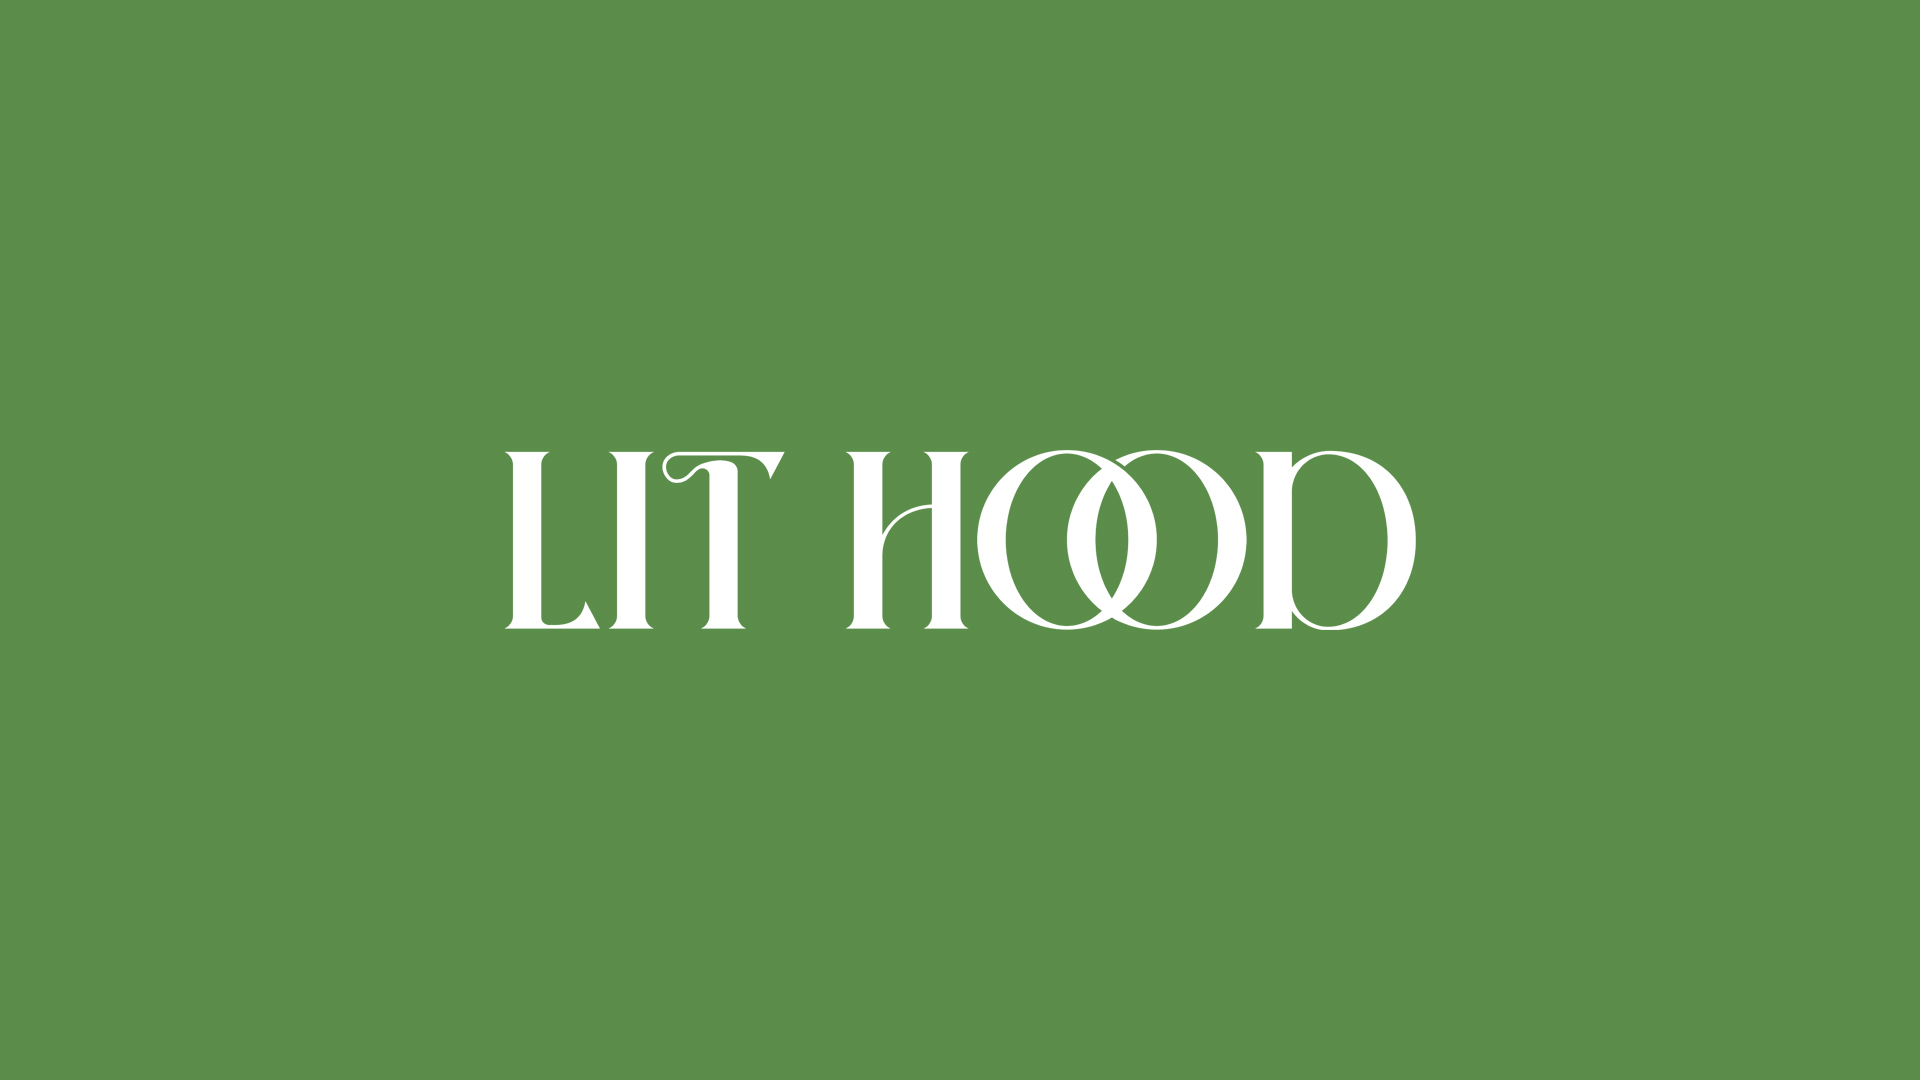 The Making of Lit Hood